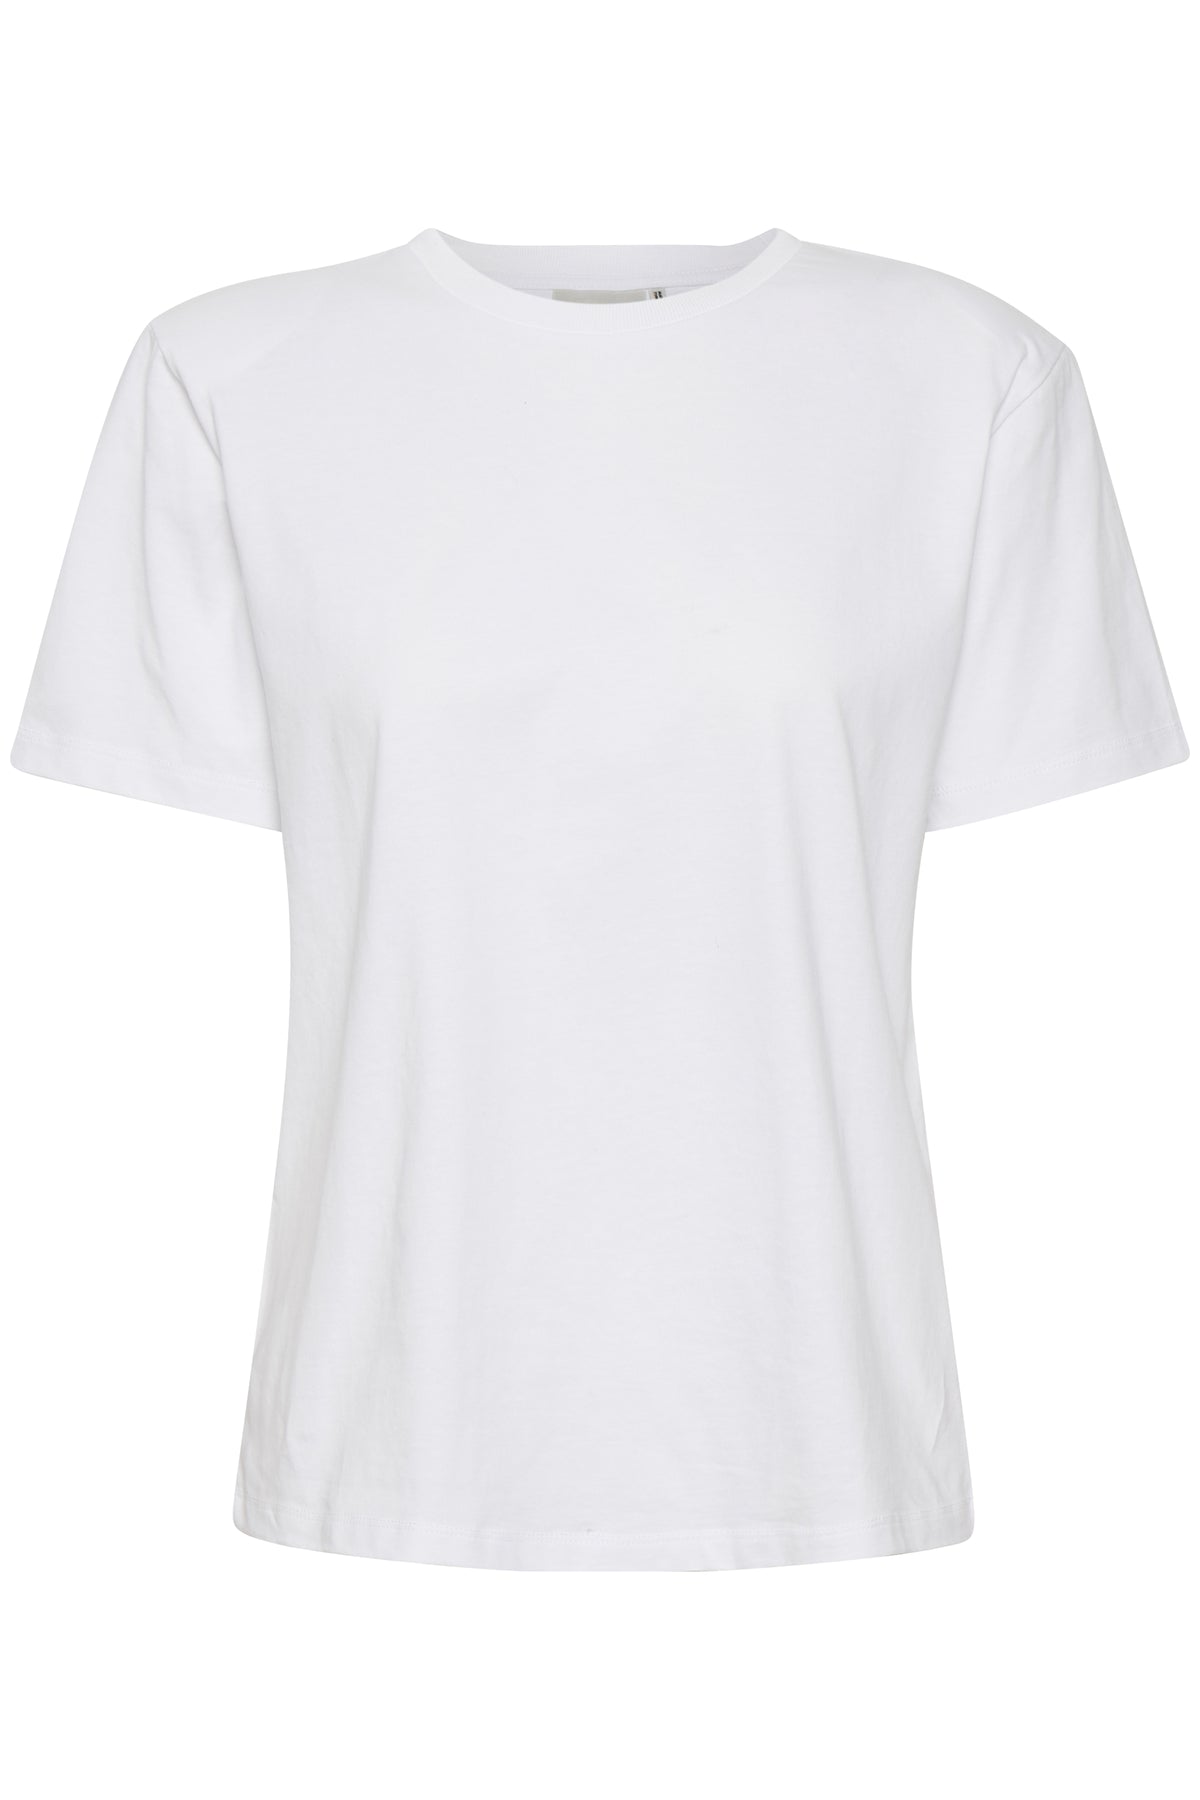 JoryGZ Tee - Bright White - Gestuz - T-skjorter & Topper - VILLOID.no